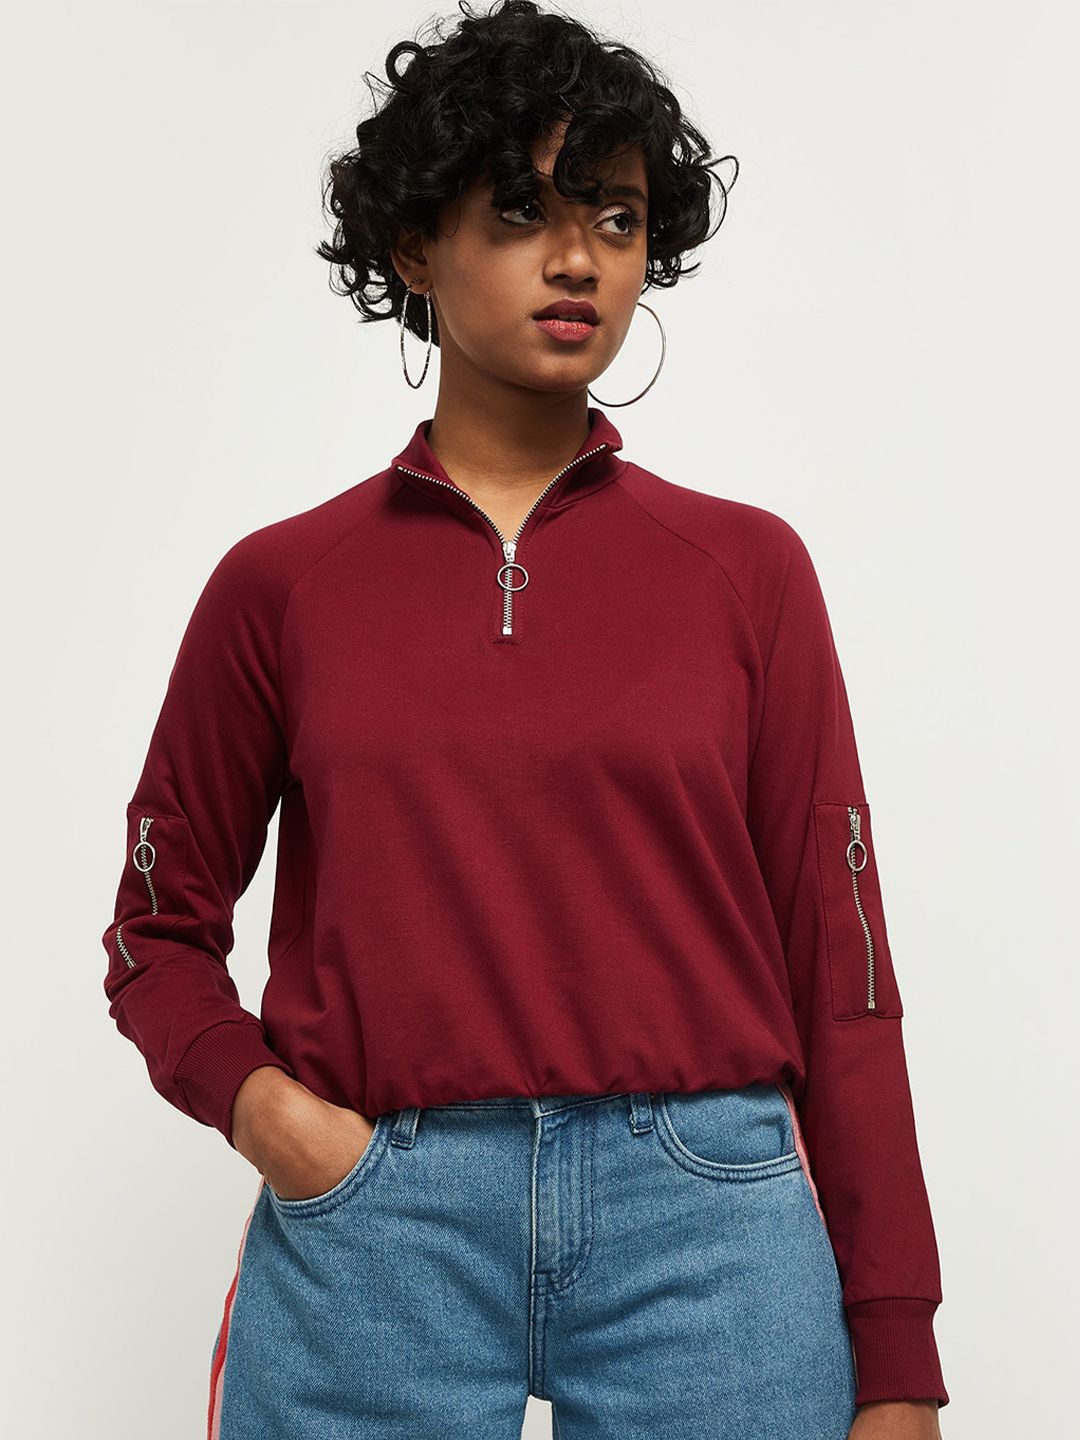 max Women Maroon Cotton Sweatshirt Price in India